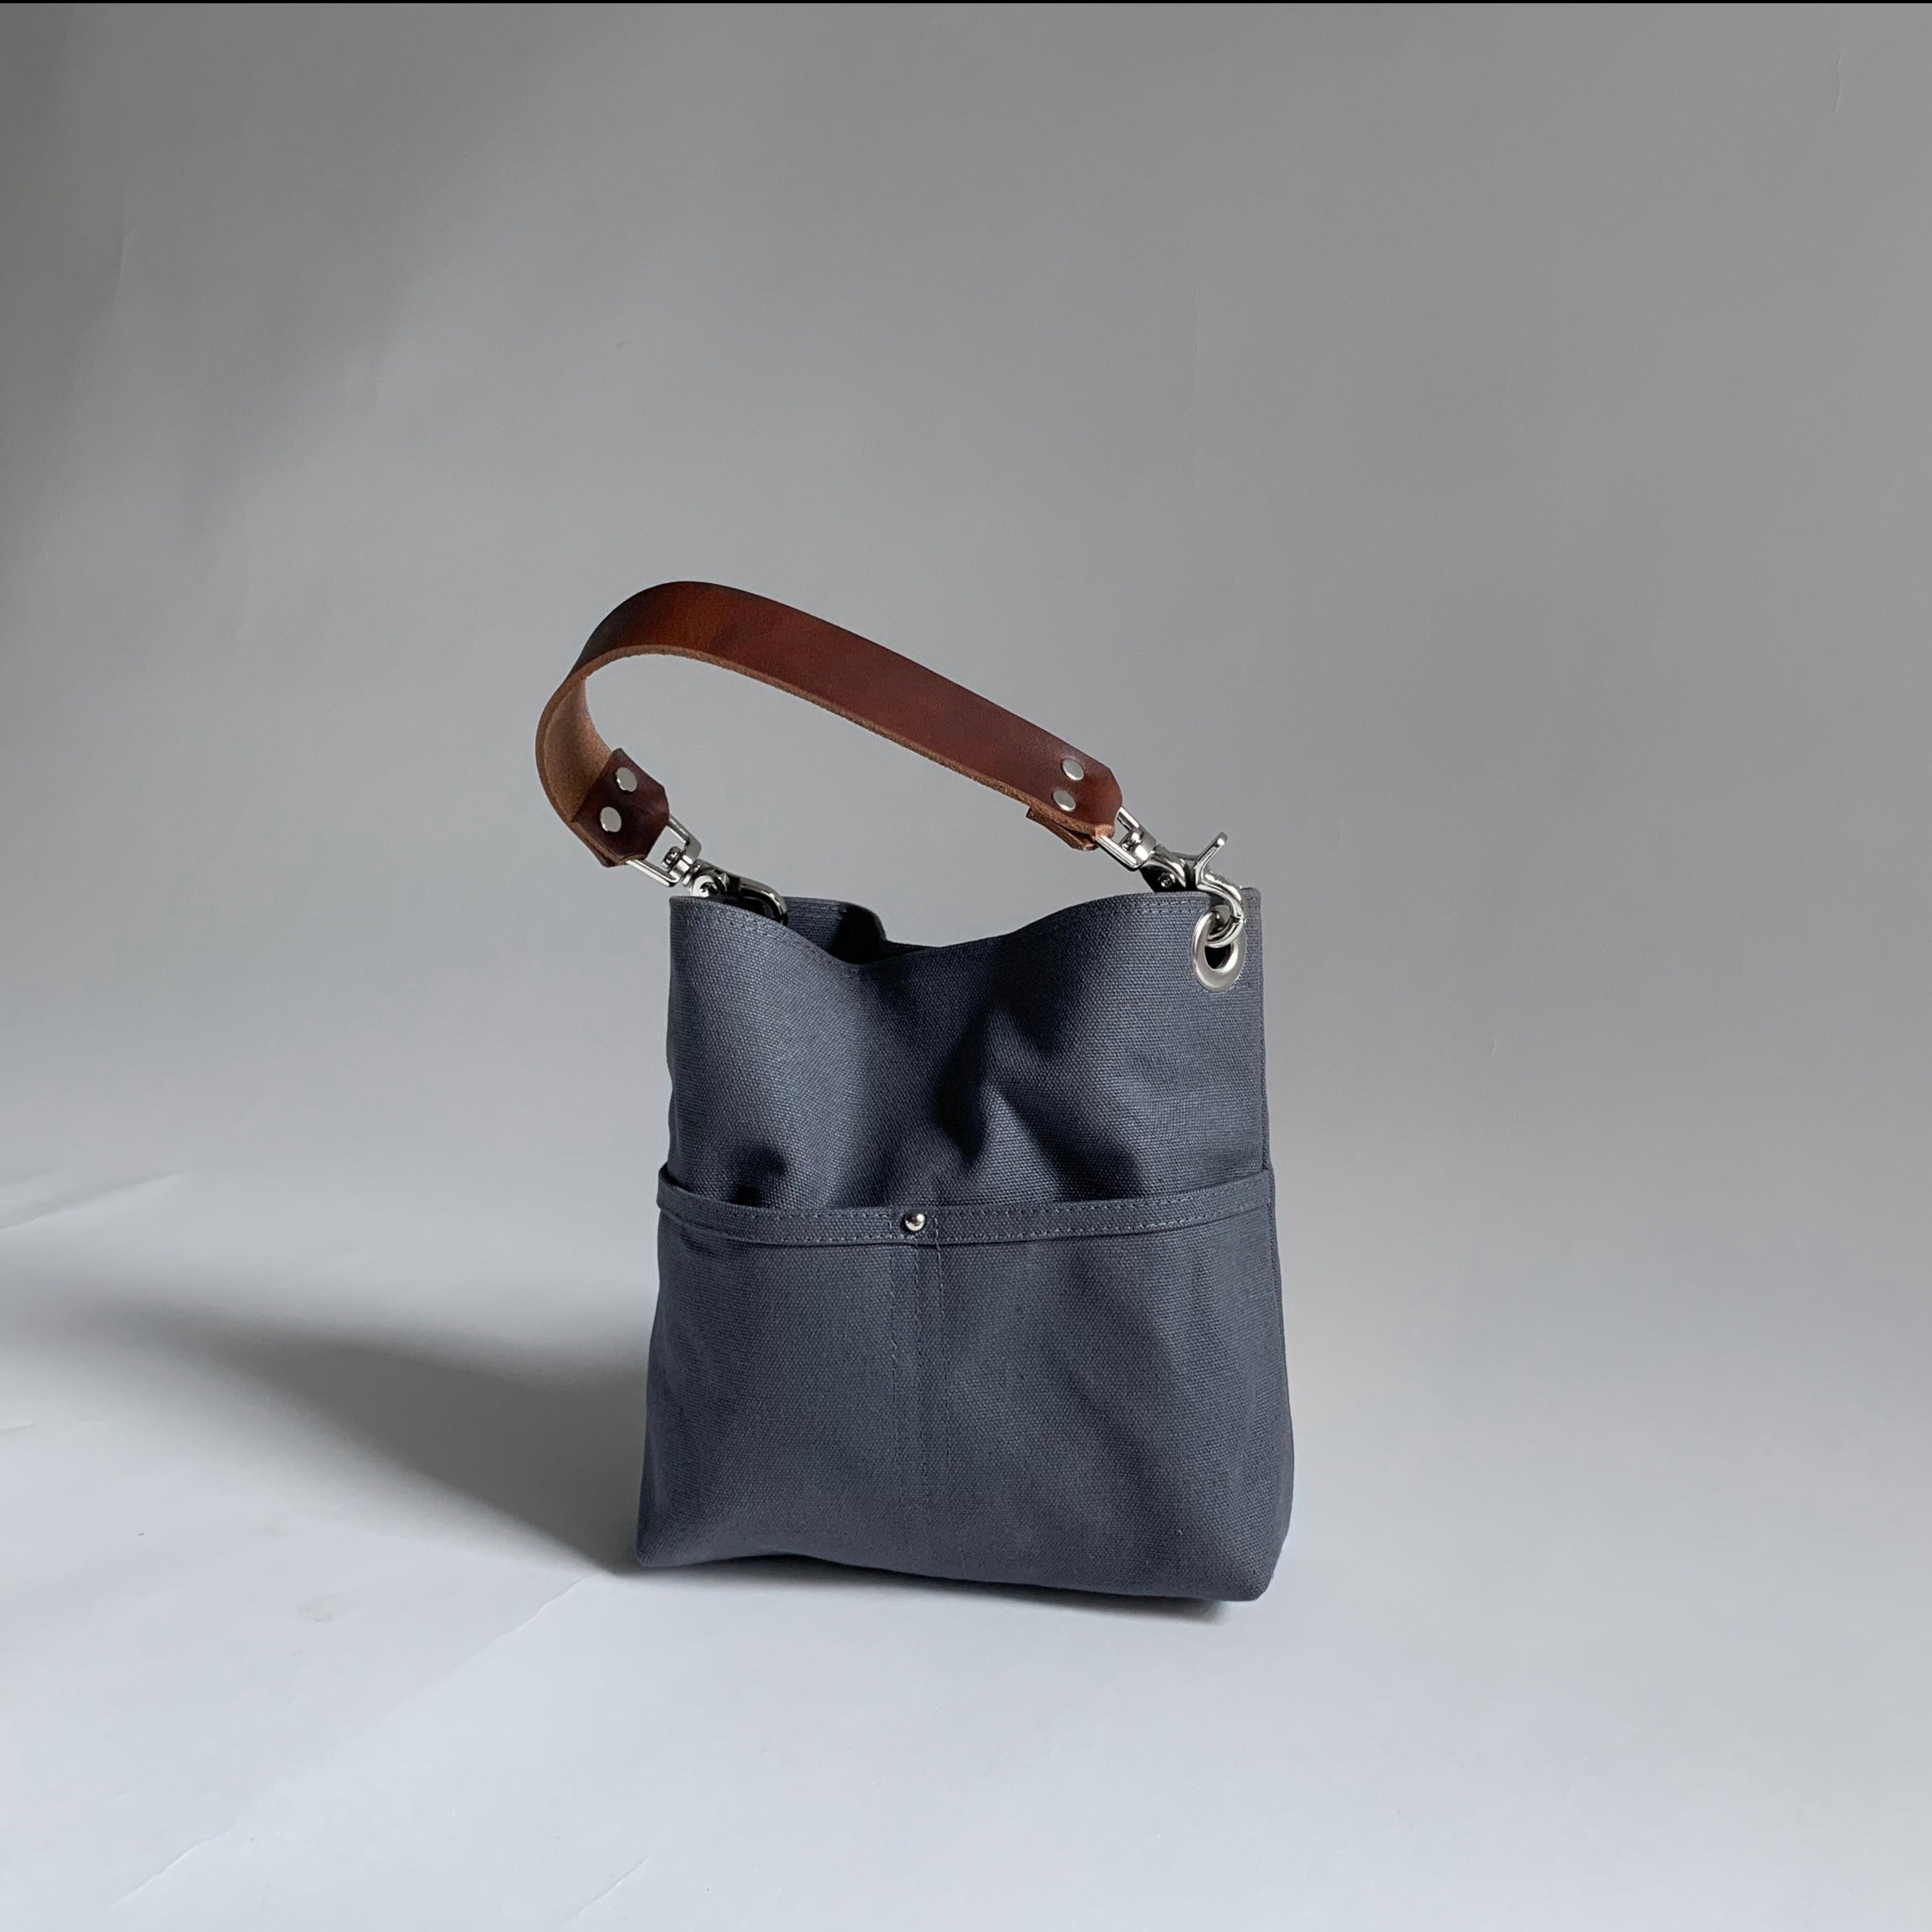 Michael Kors Gray Leather Slouchy Hobo Bag Purse | eBay